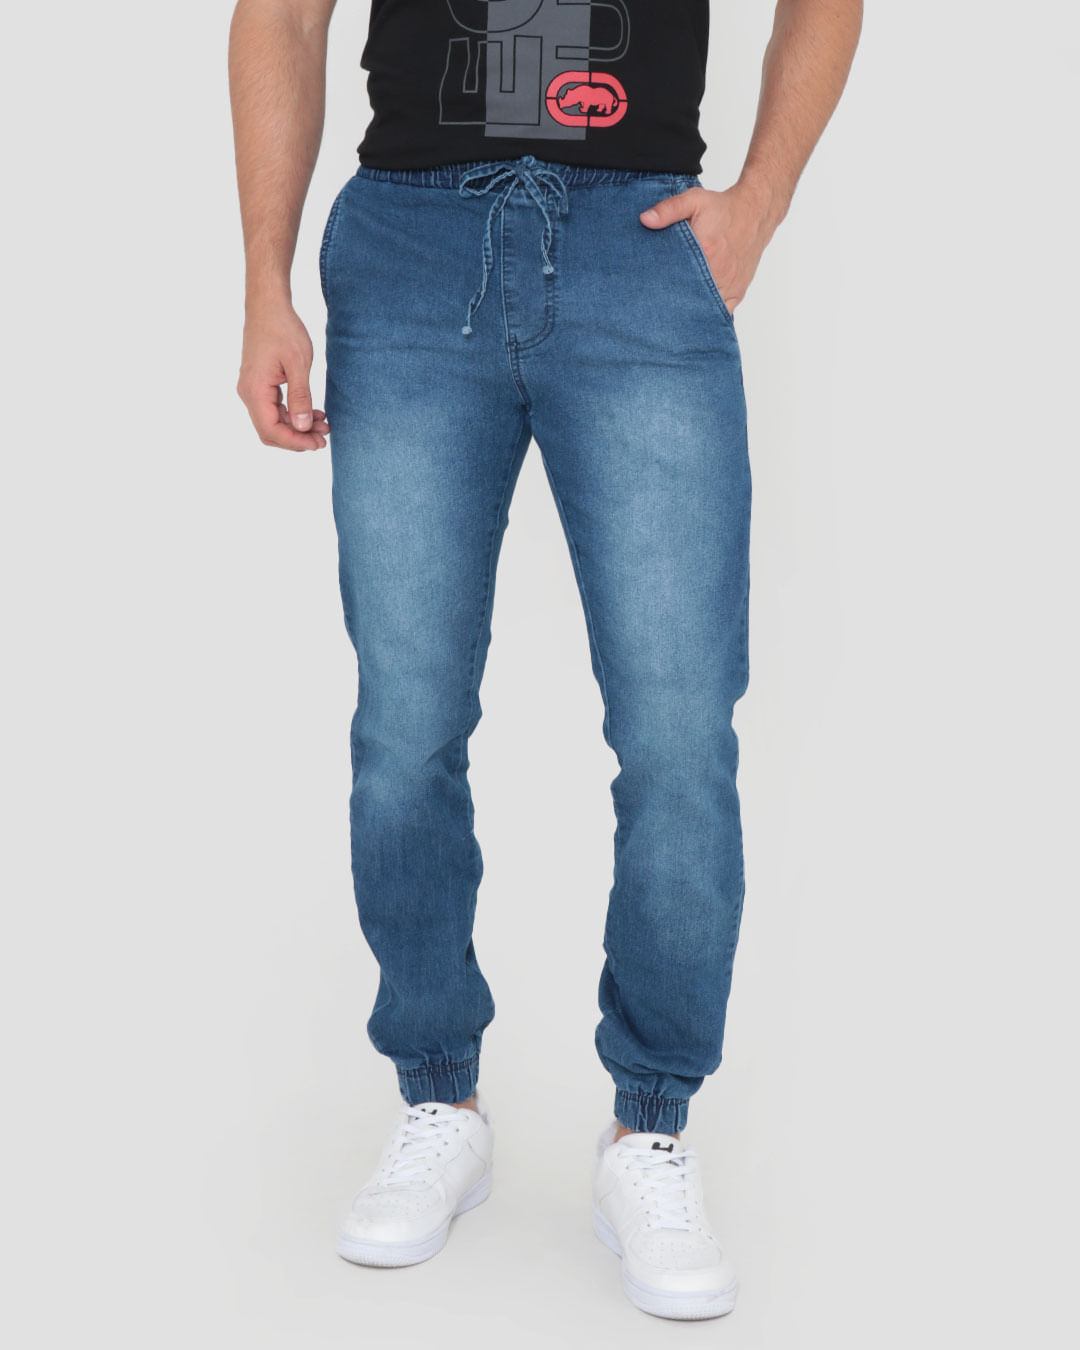 23121000995045-blue-jeans-medio-1